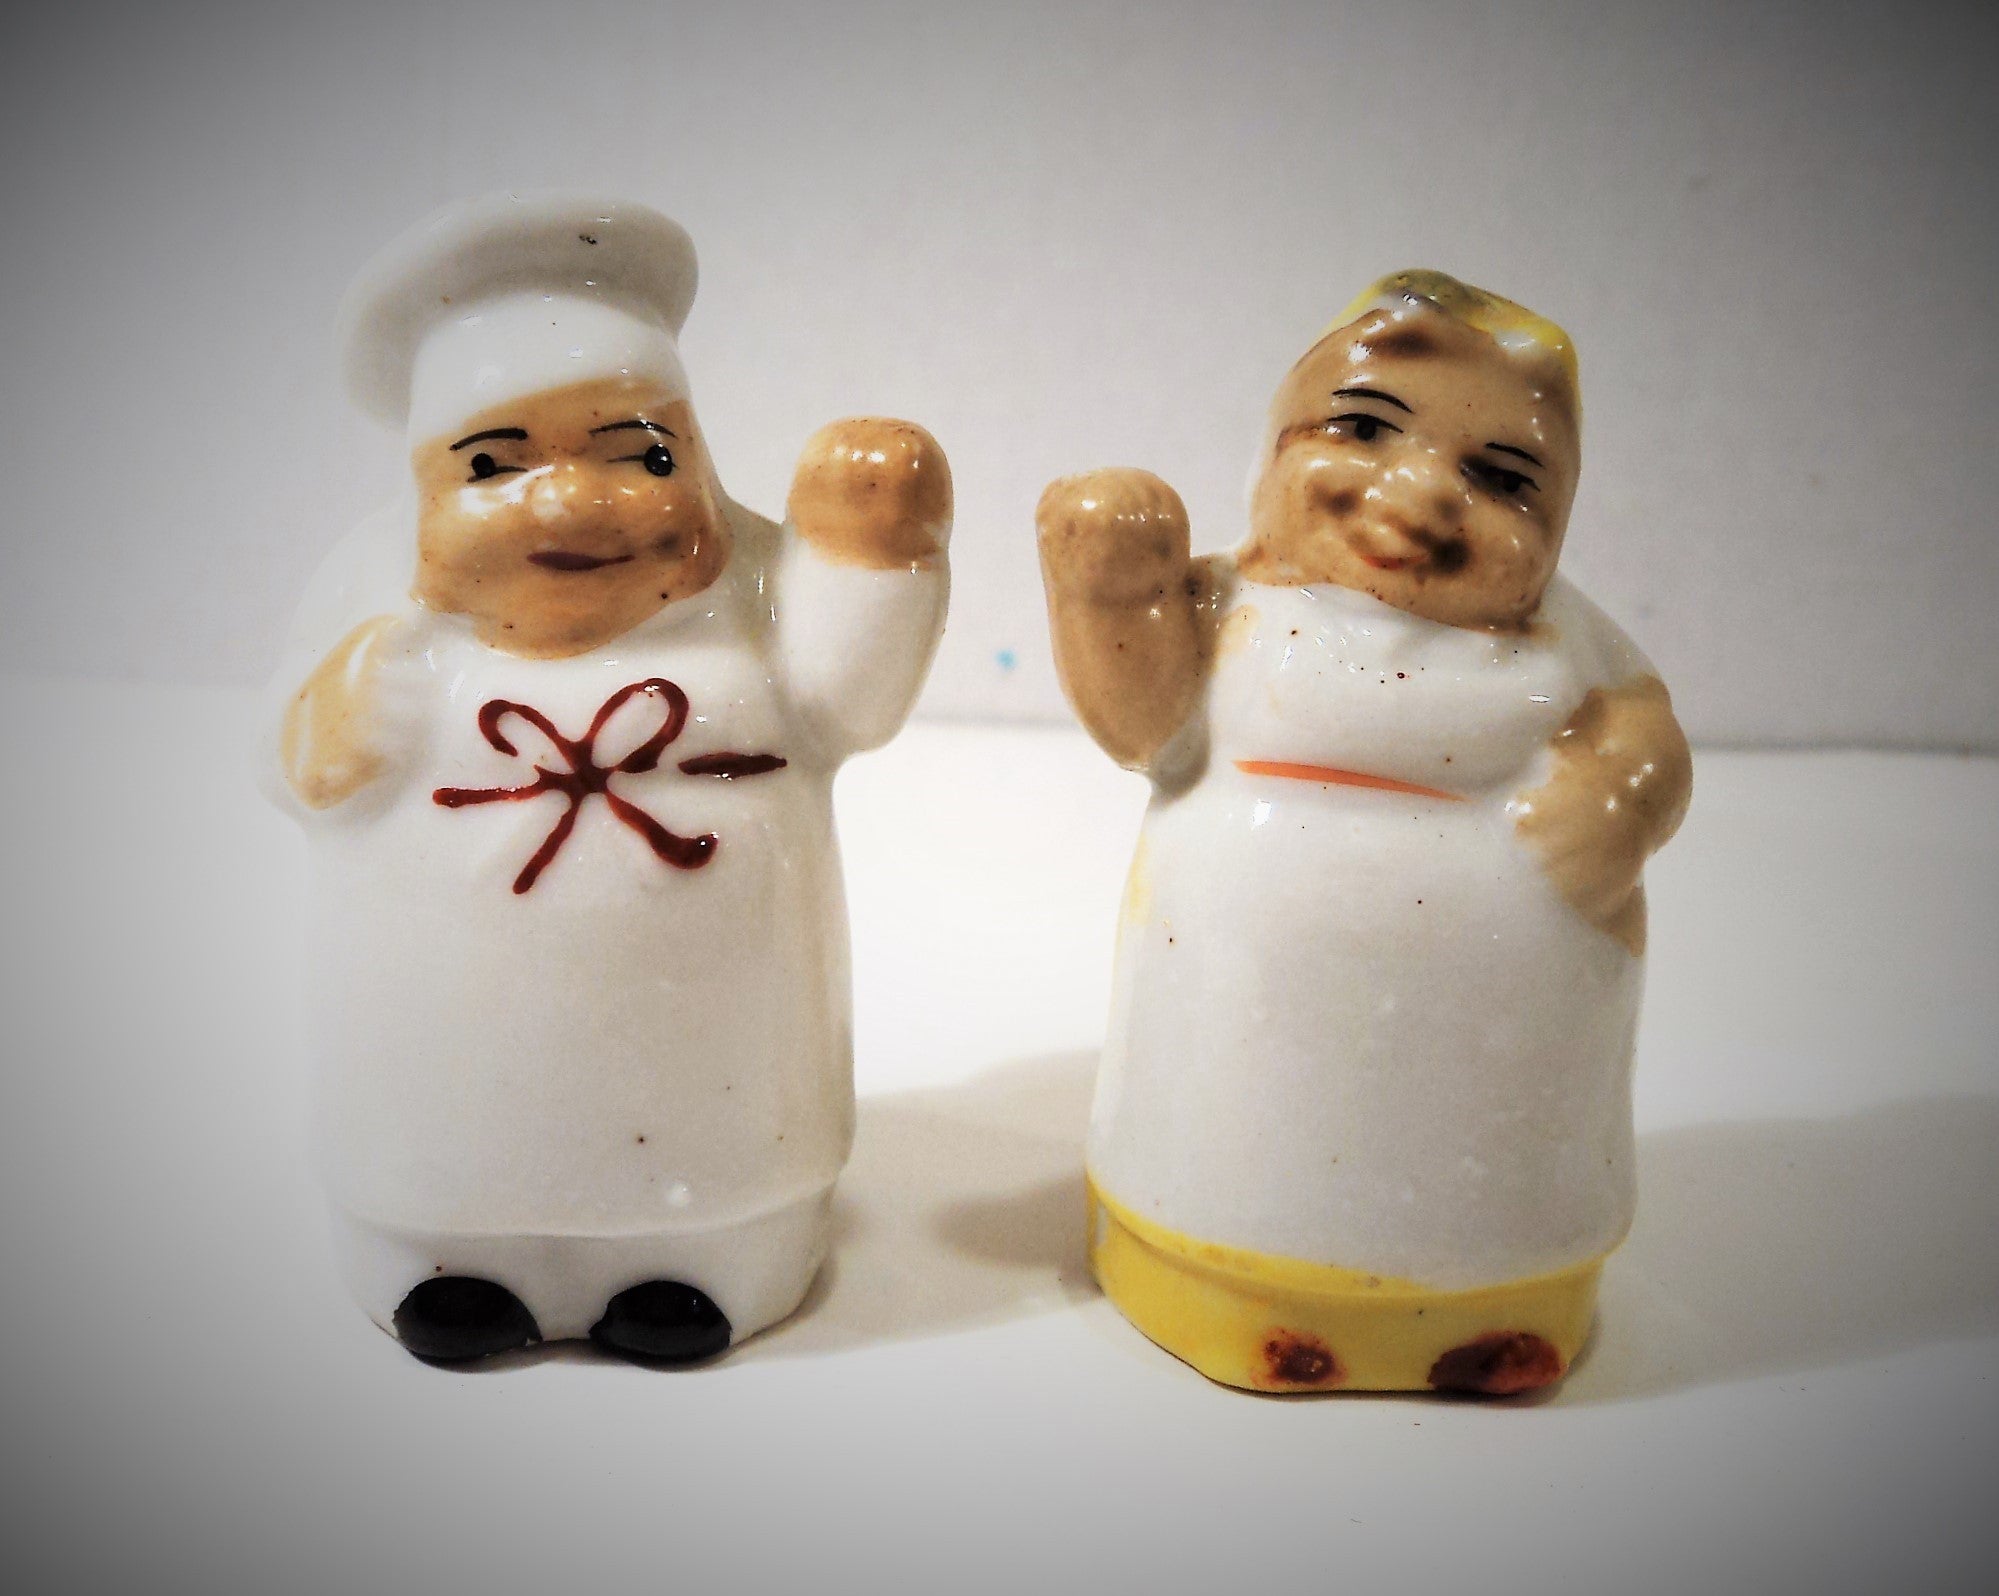 Chef figurine salt pepper Chef shakers ceramic Mid century set